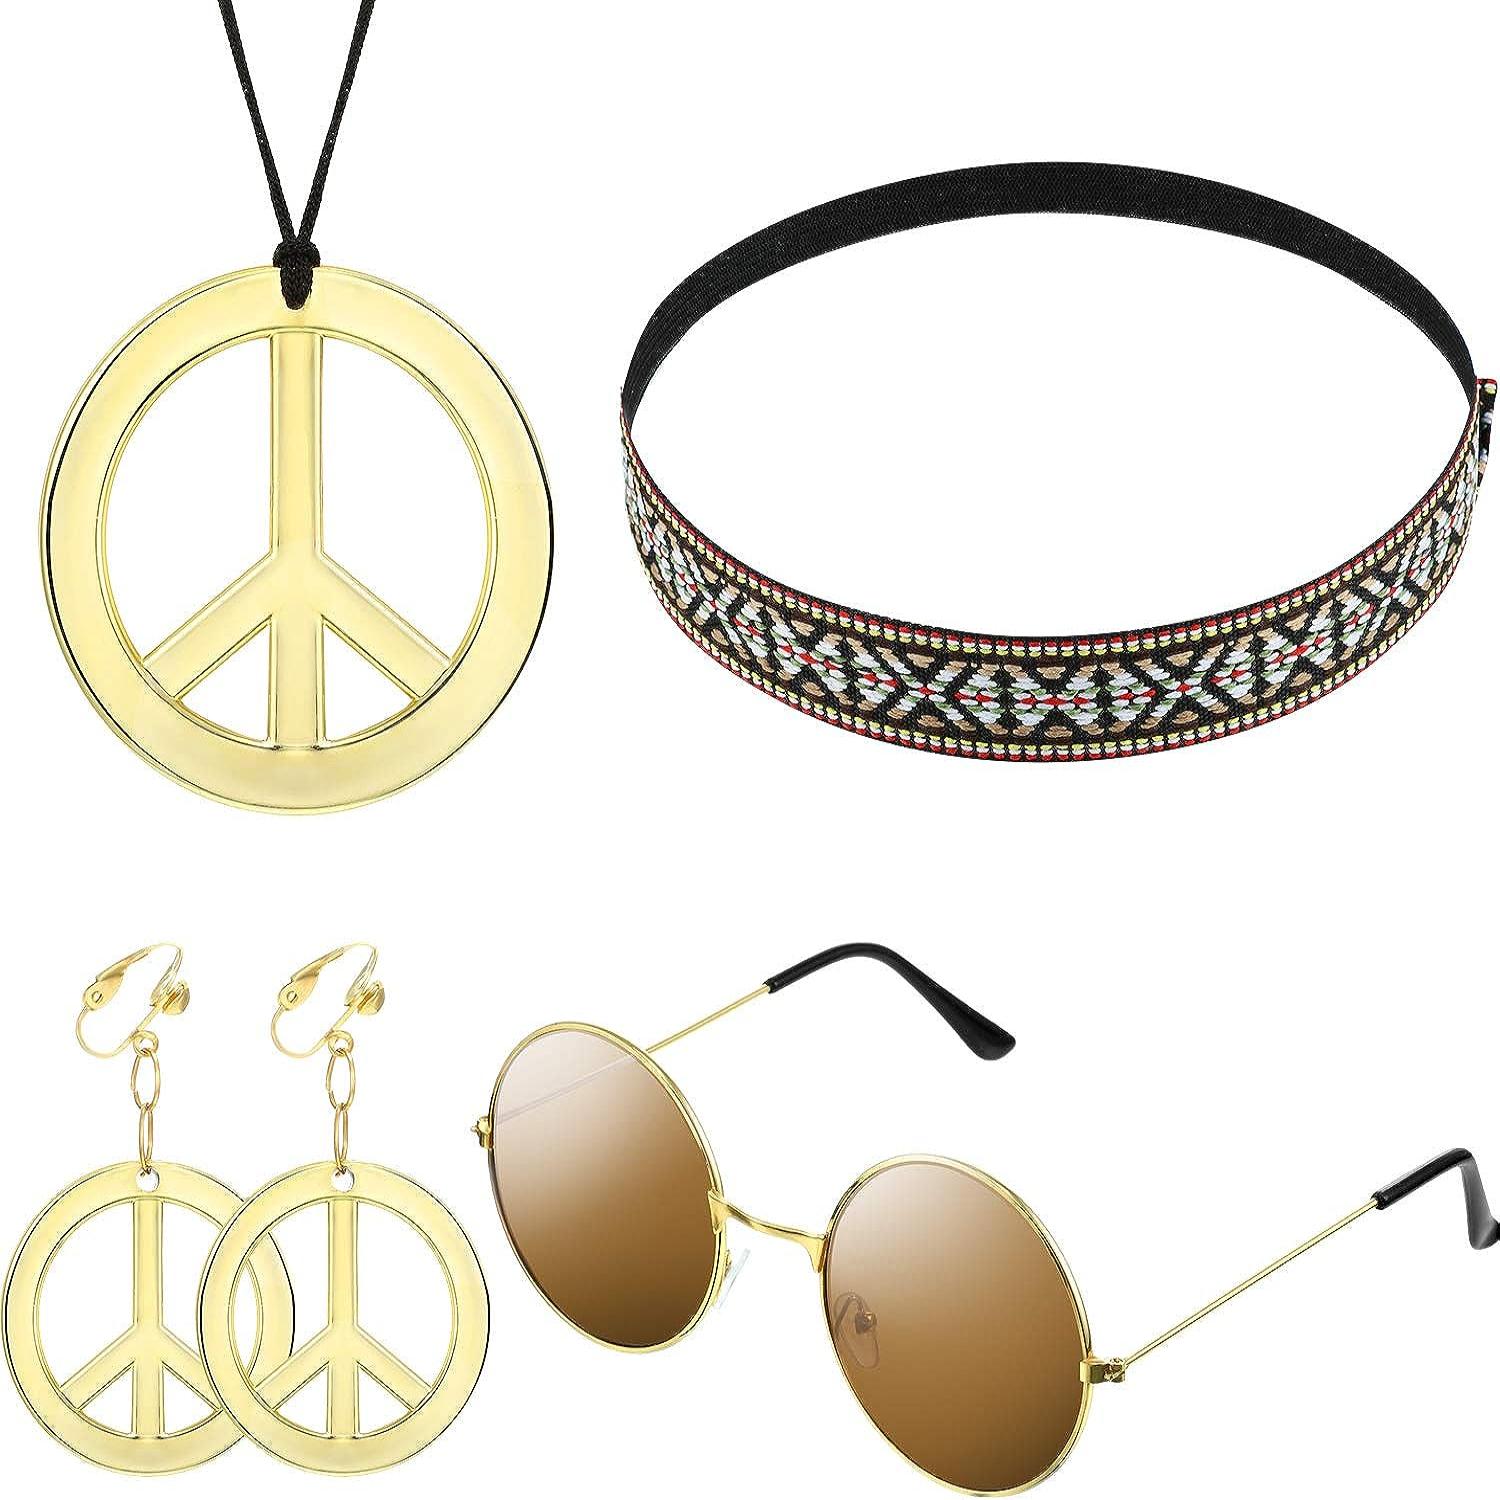 Women's Hippie Clothing Set Includes Sunglasses, Peace Sign